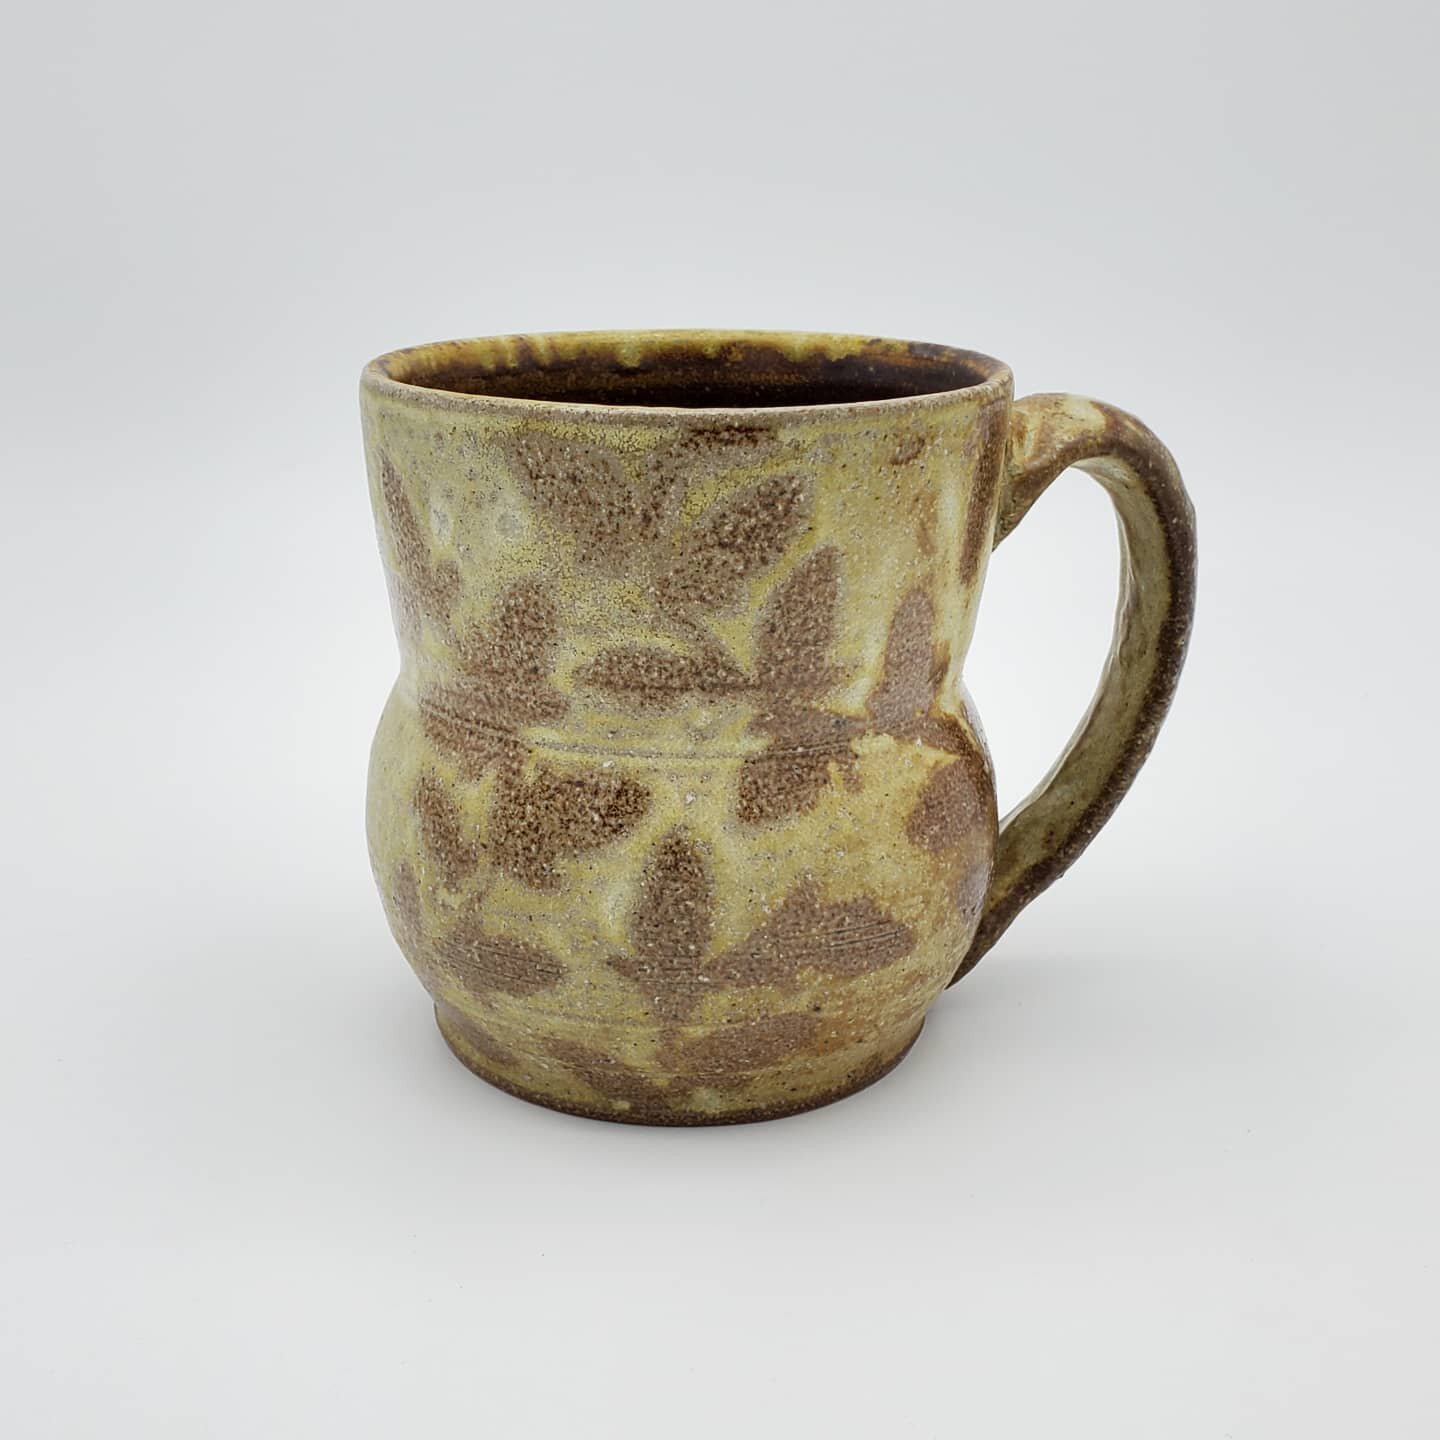 From the UGA salt kiln

------------

#mugshotmonday #clay #pottery #cup #mug #stoneware #saltfired #drawingonclay #wheelthrown #pinchpot  #madebyhand #handmadepottery #madeinathensga